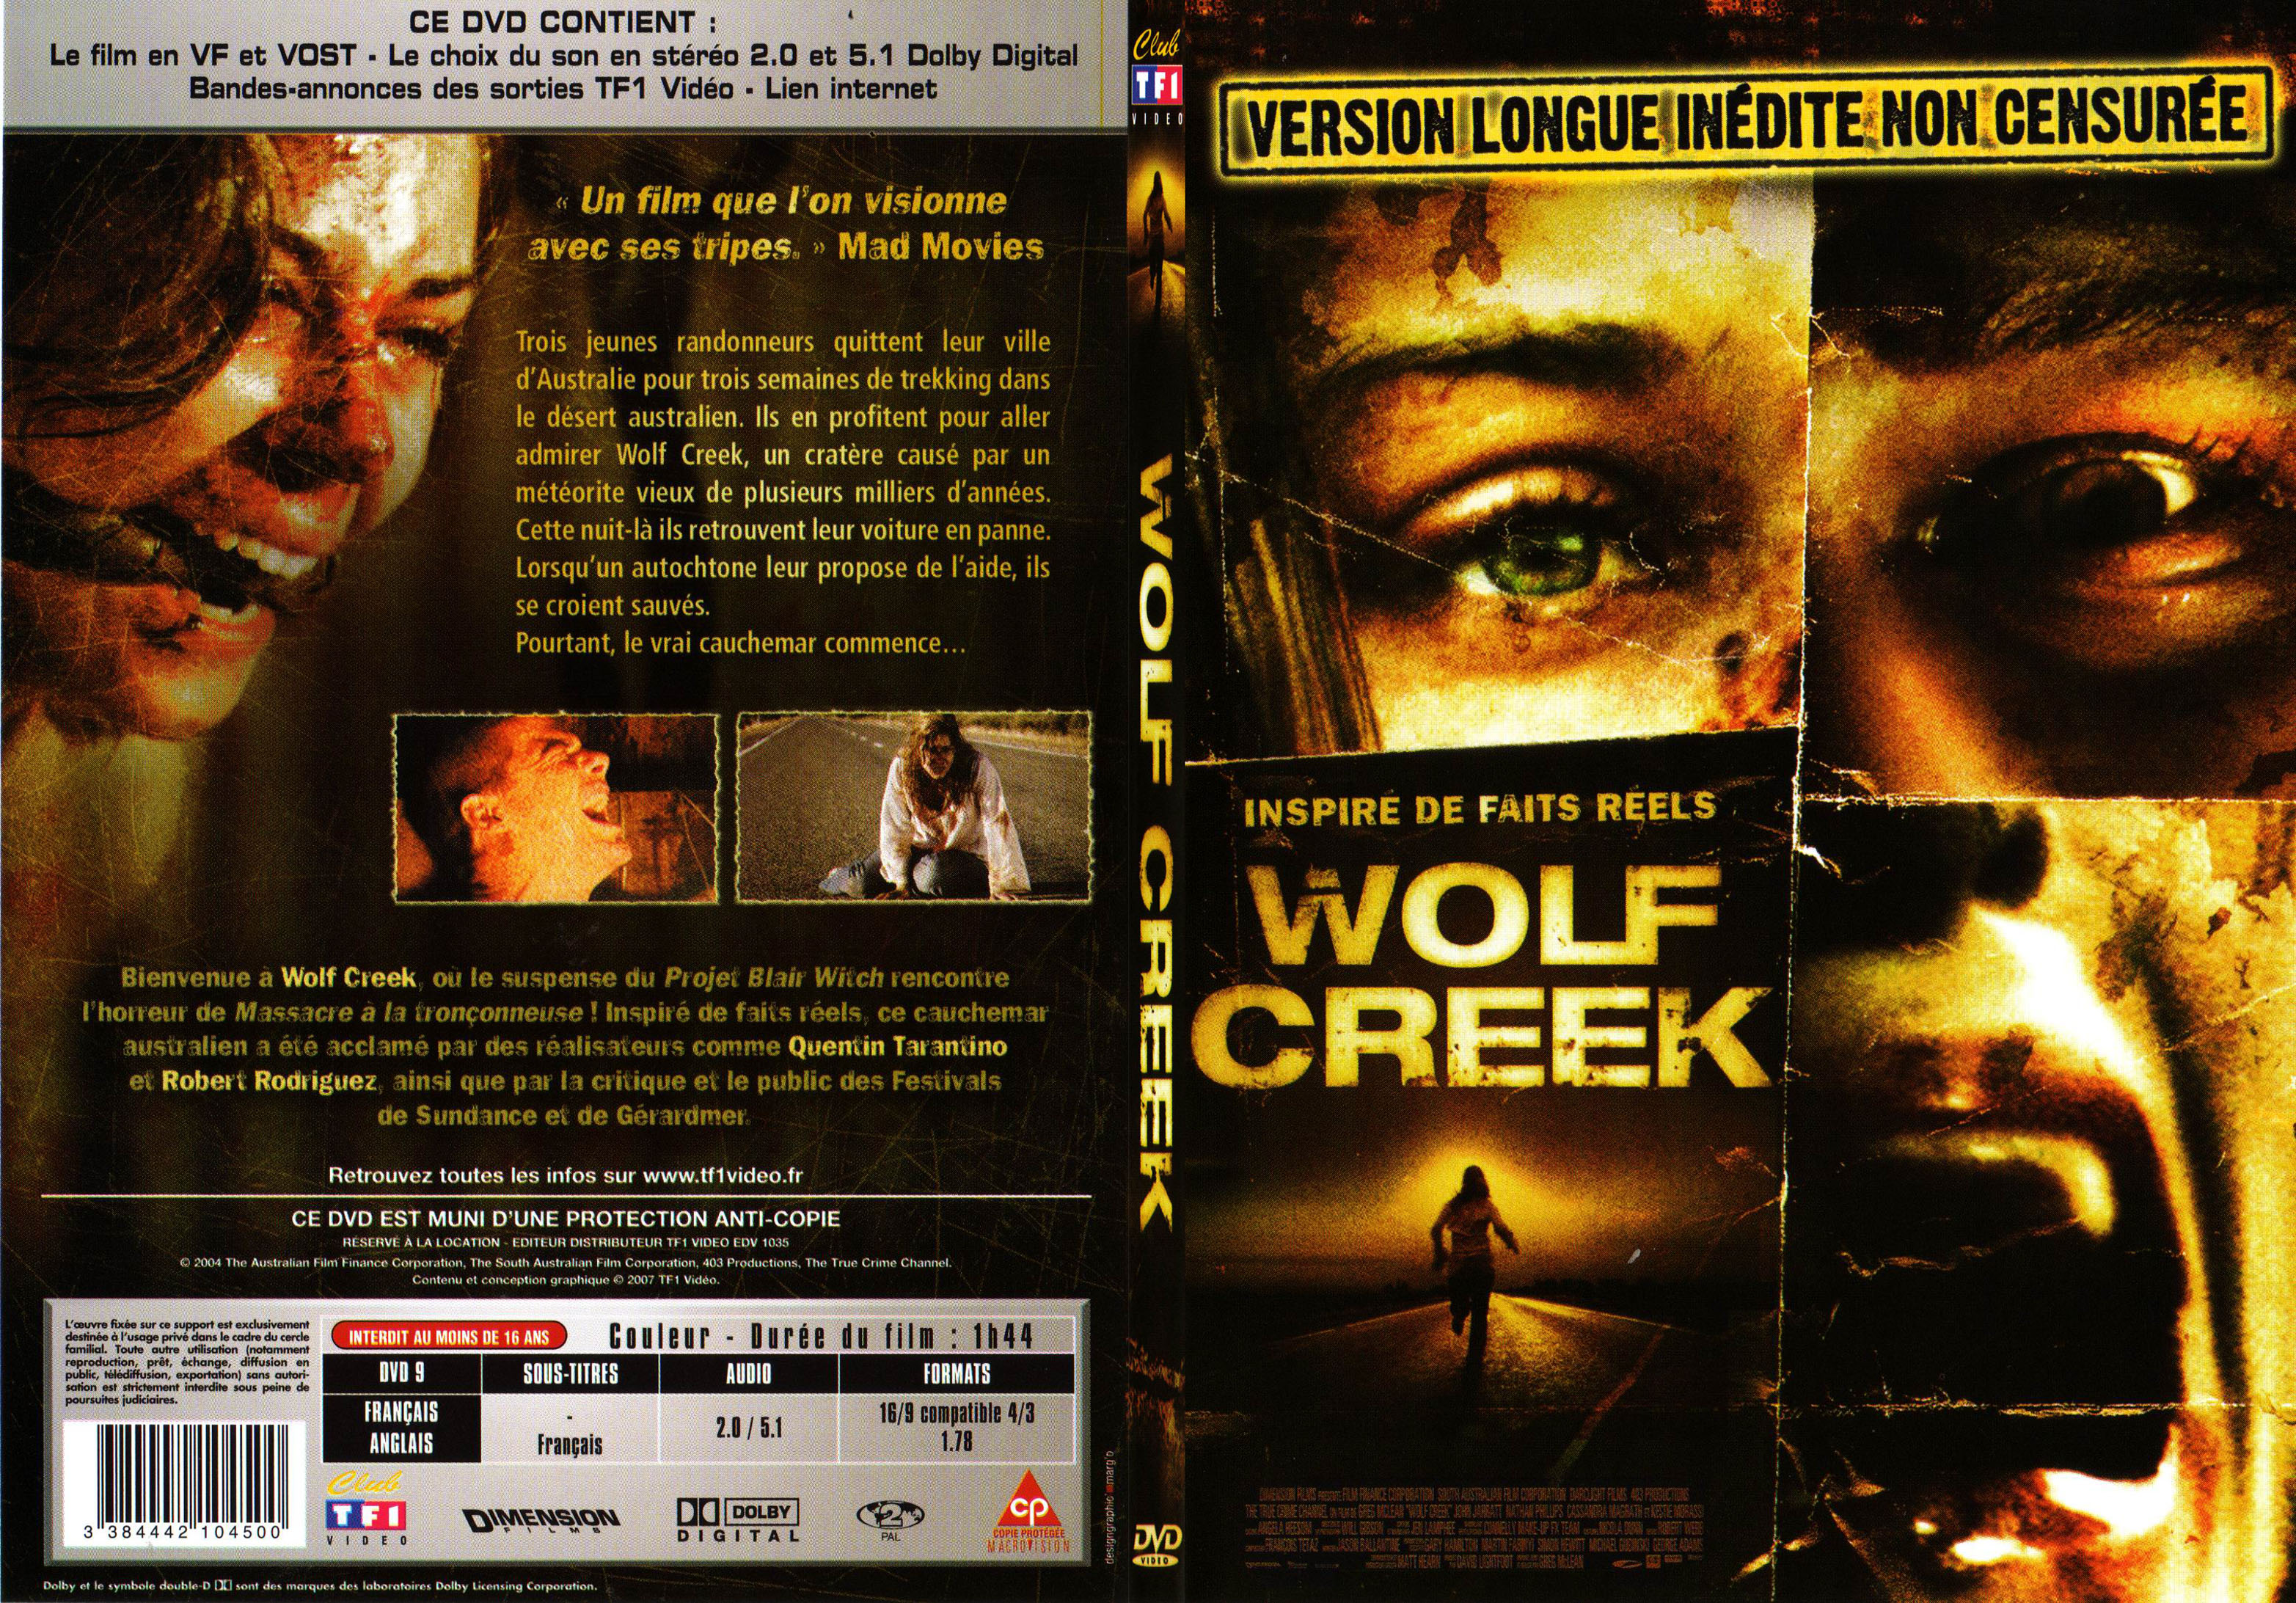 Jaquette DVD Wolf creek -SLIM